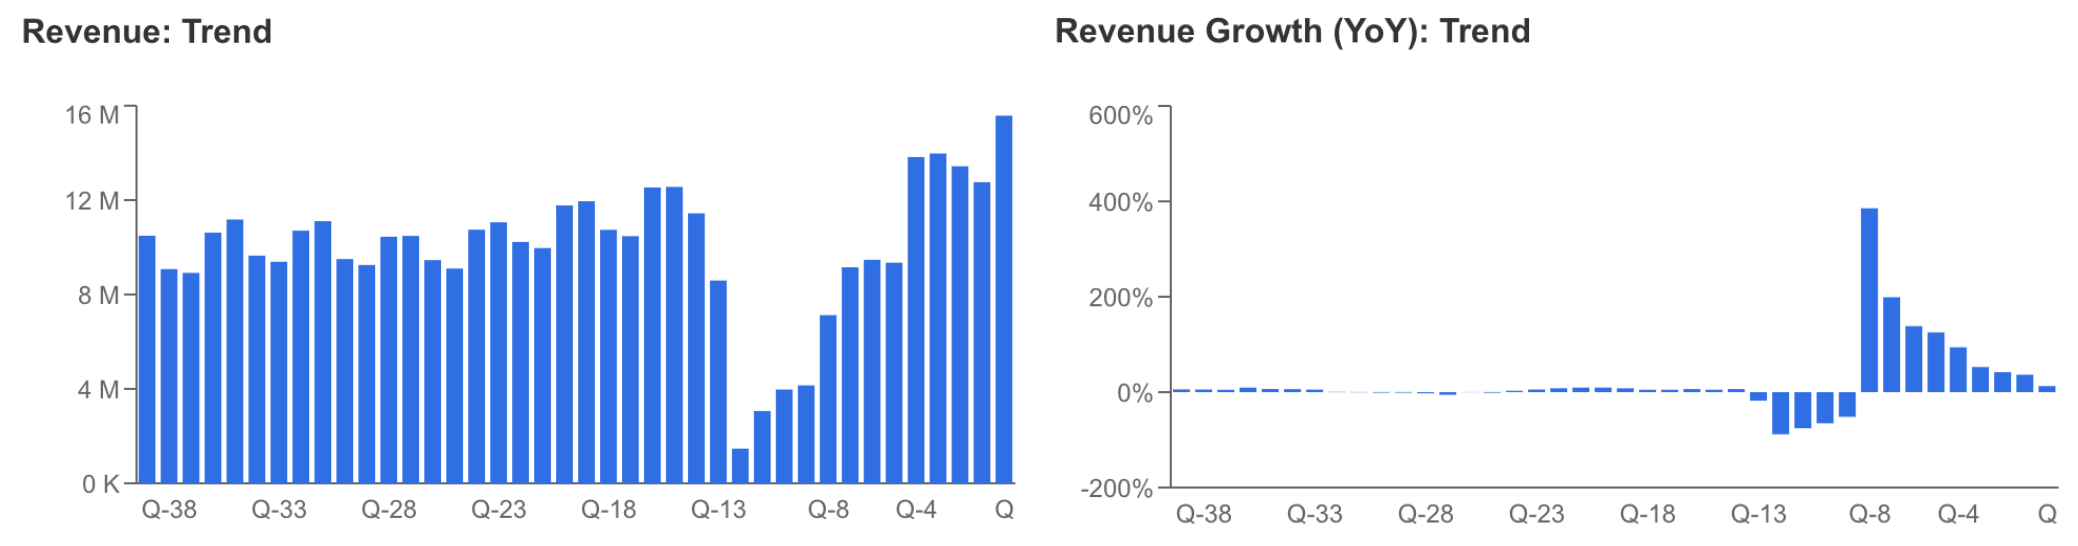 DAL Revenue Growth